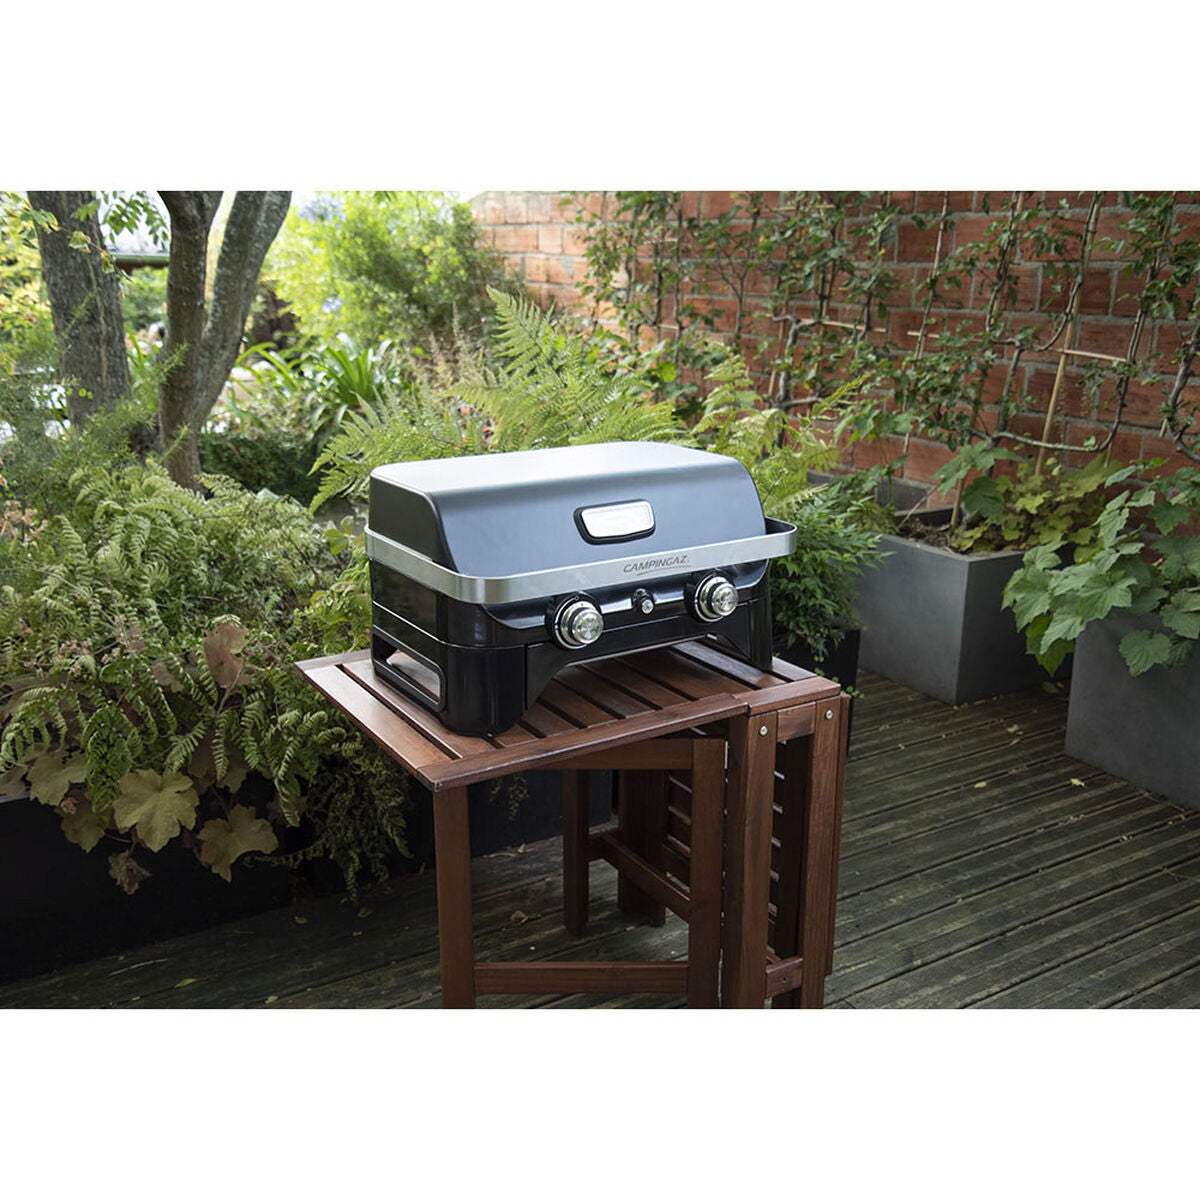 Barbecue à gaz Campingaz Attitude 2100 LX 5000 W 65 x 52 x 36 cm Noir - Campingaz - Jardin D'Eyden - jardindeyden.fr